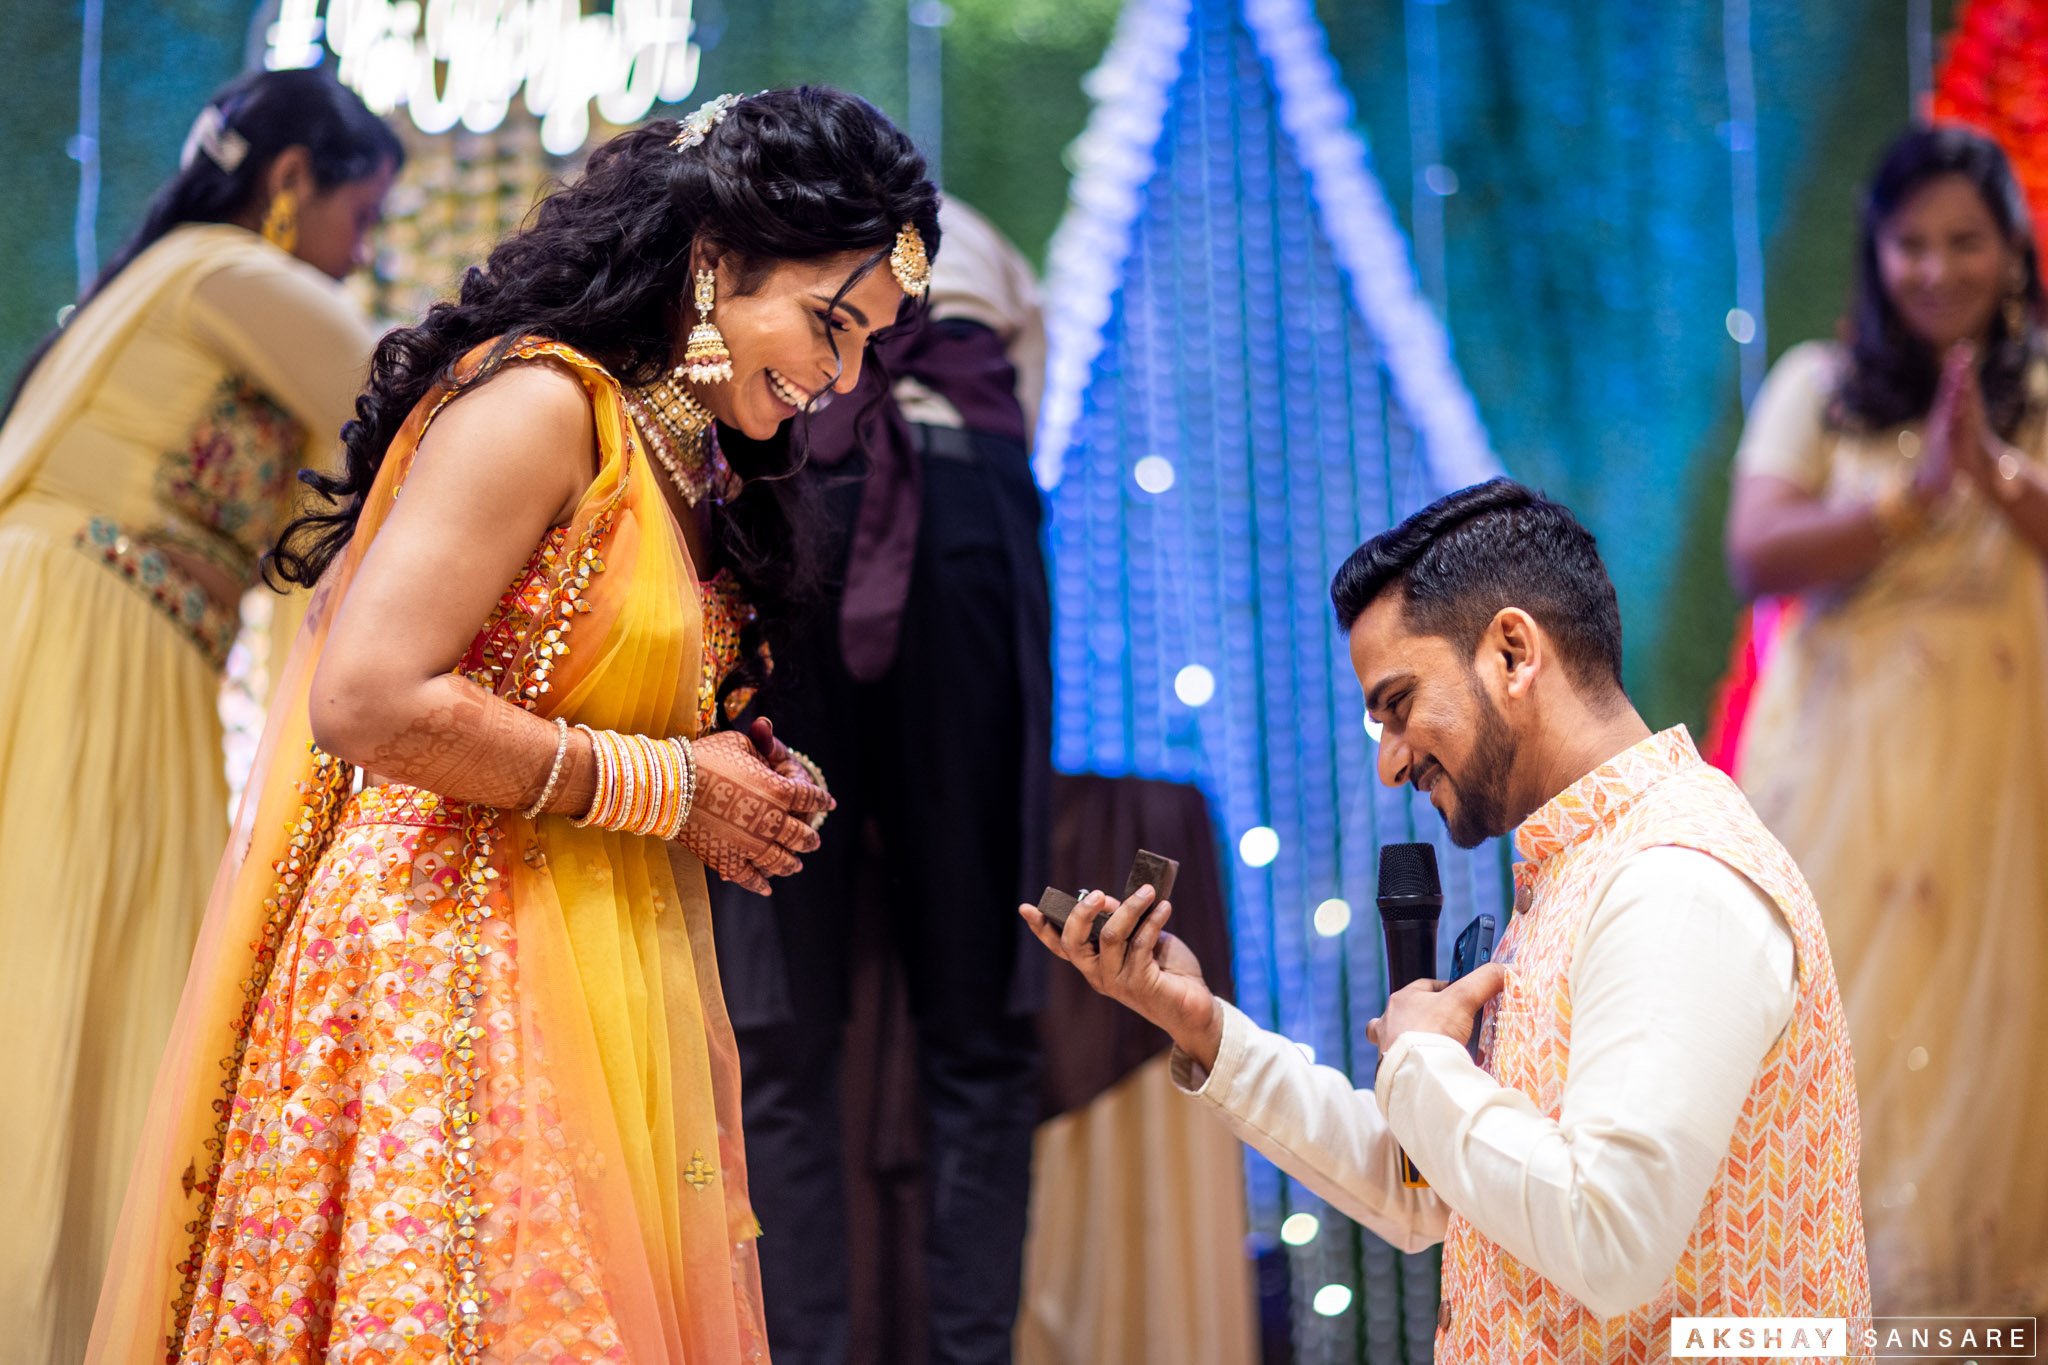 Lipika x Bhavya Compress Akshay Sansare Photography & Films Best wedding photographers in mumbai india-18.jpg